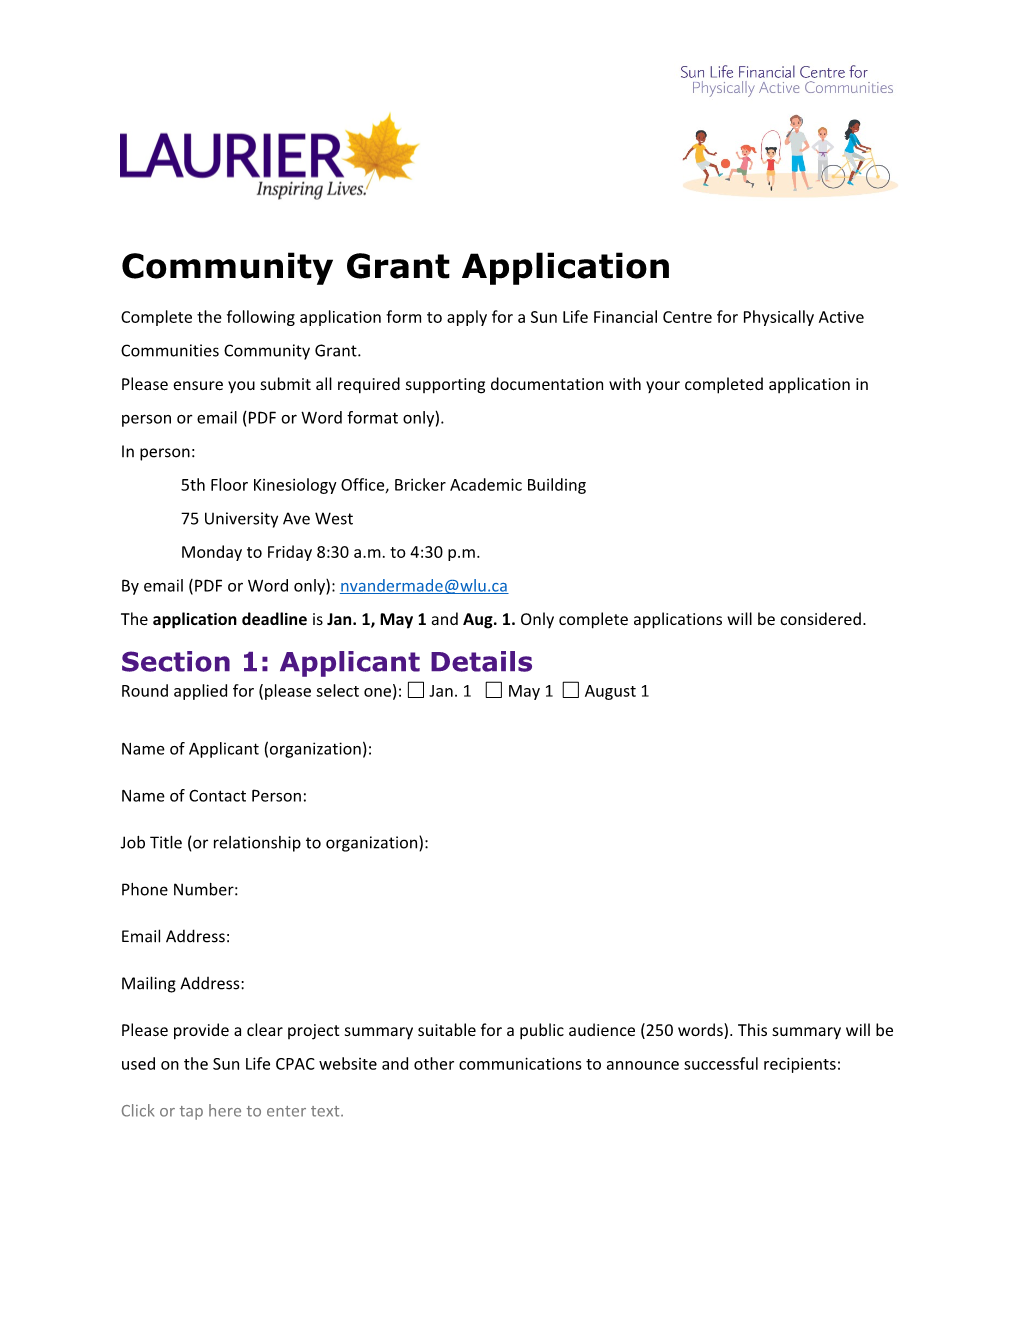 Community Grant Application